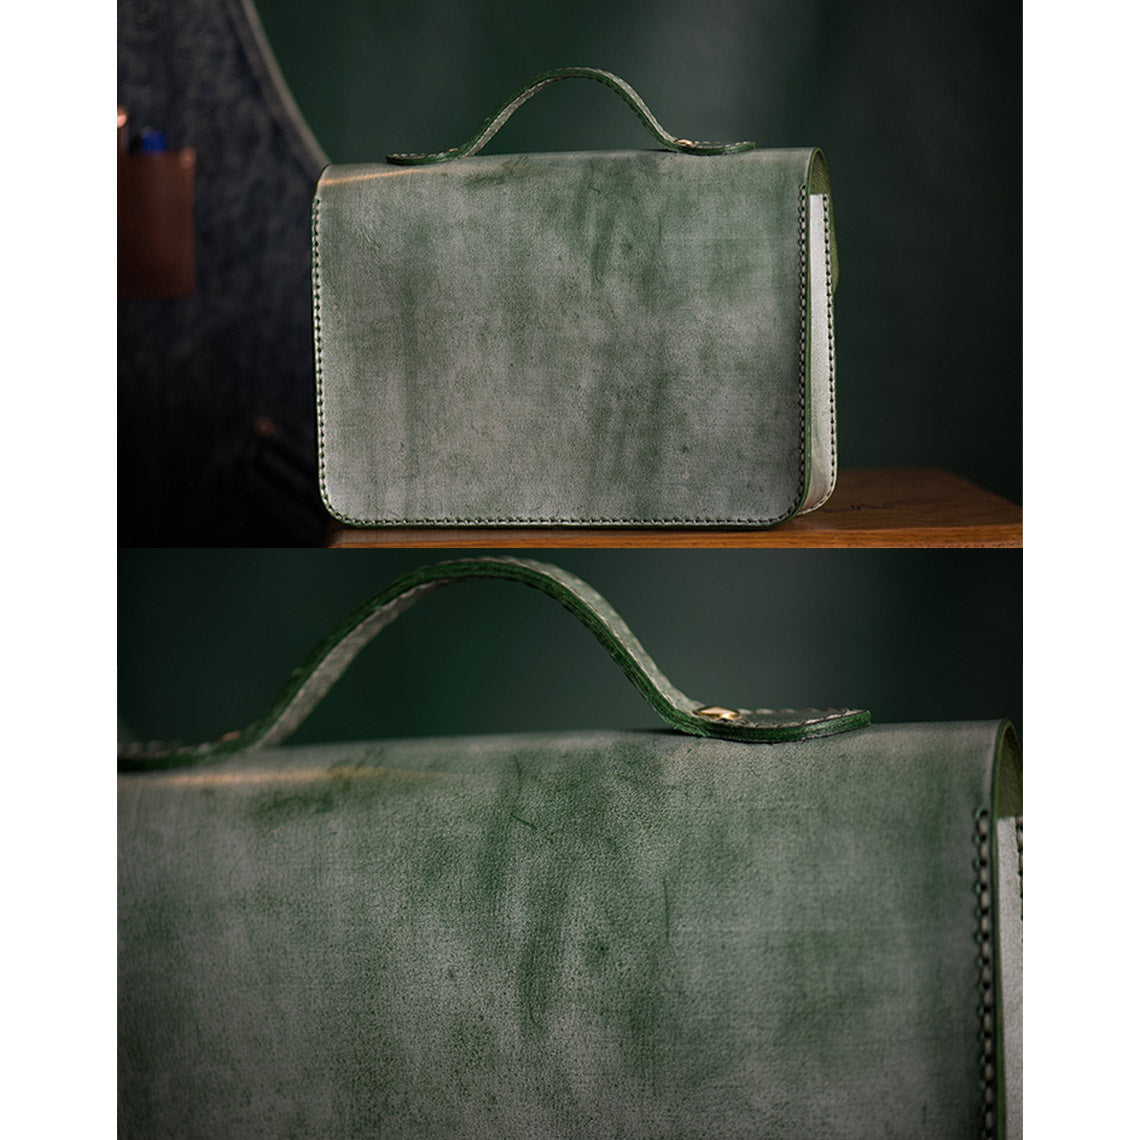 POPSEWING® Vegetable Tanned Leather Satchel Crossbody Bag DIY Kits